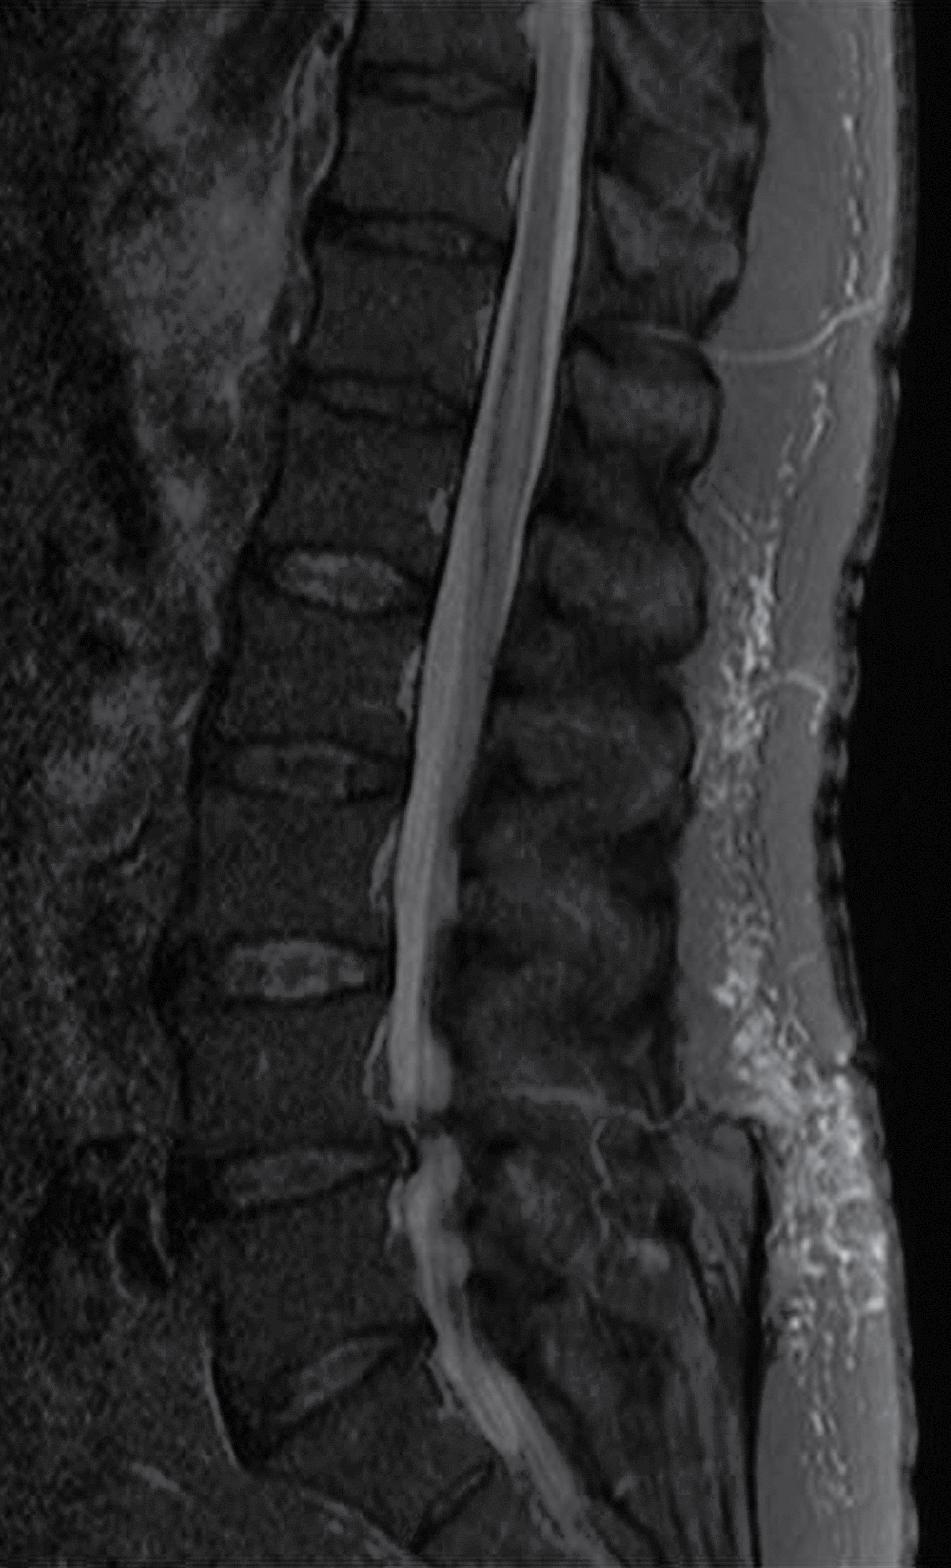 ruggenmerg TXII LI myelopathie met zwelling van het ruggenmerg FIGUUR 1 Sagittale T2 gewogen MRI-opname van patiënt A, met zwelling van het ruggenmerg en myelopathie ter hoogte van Txii en Li,